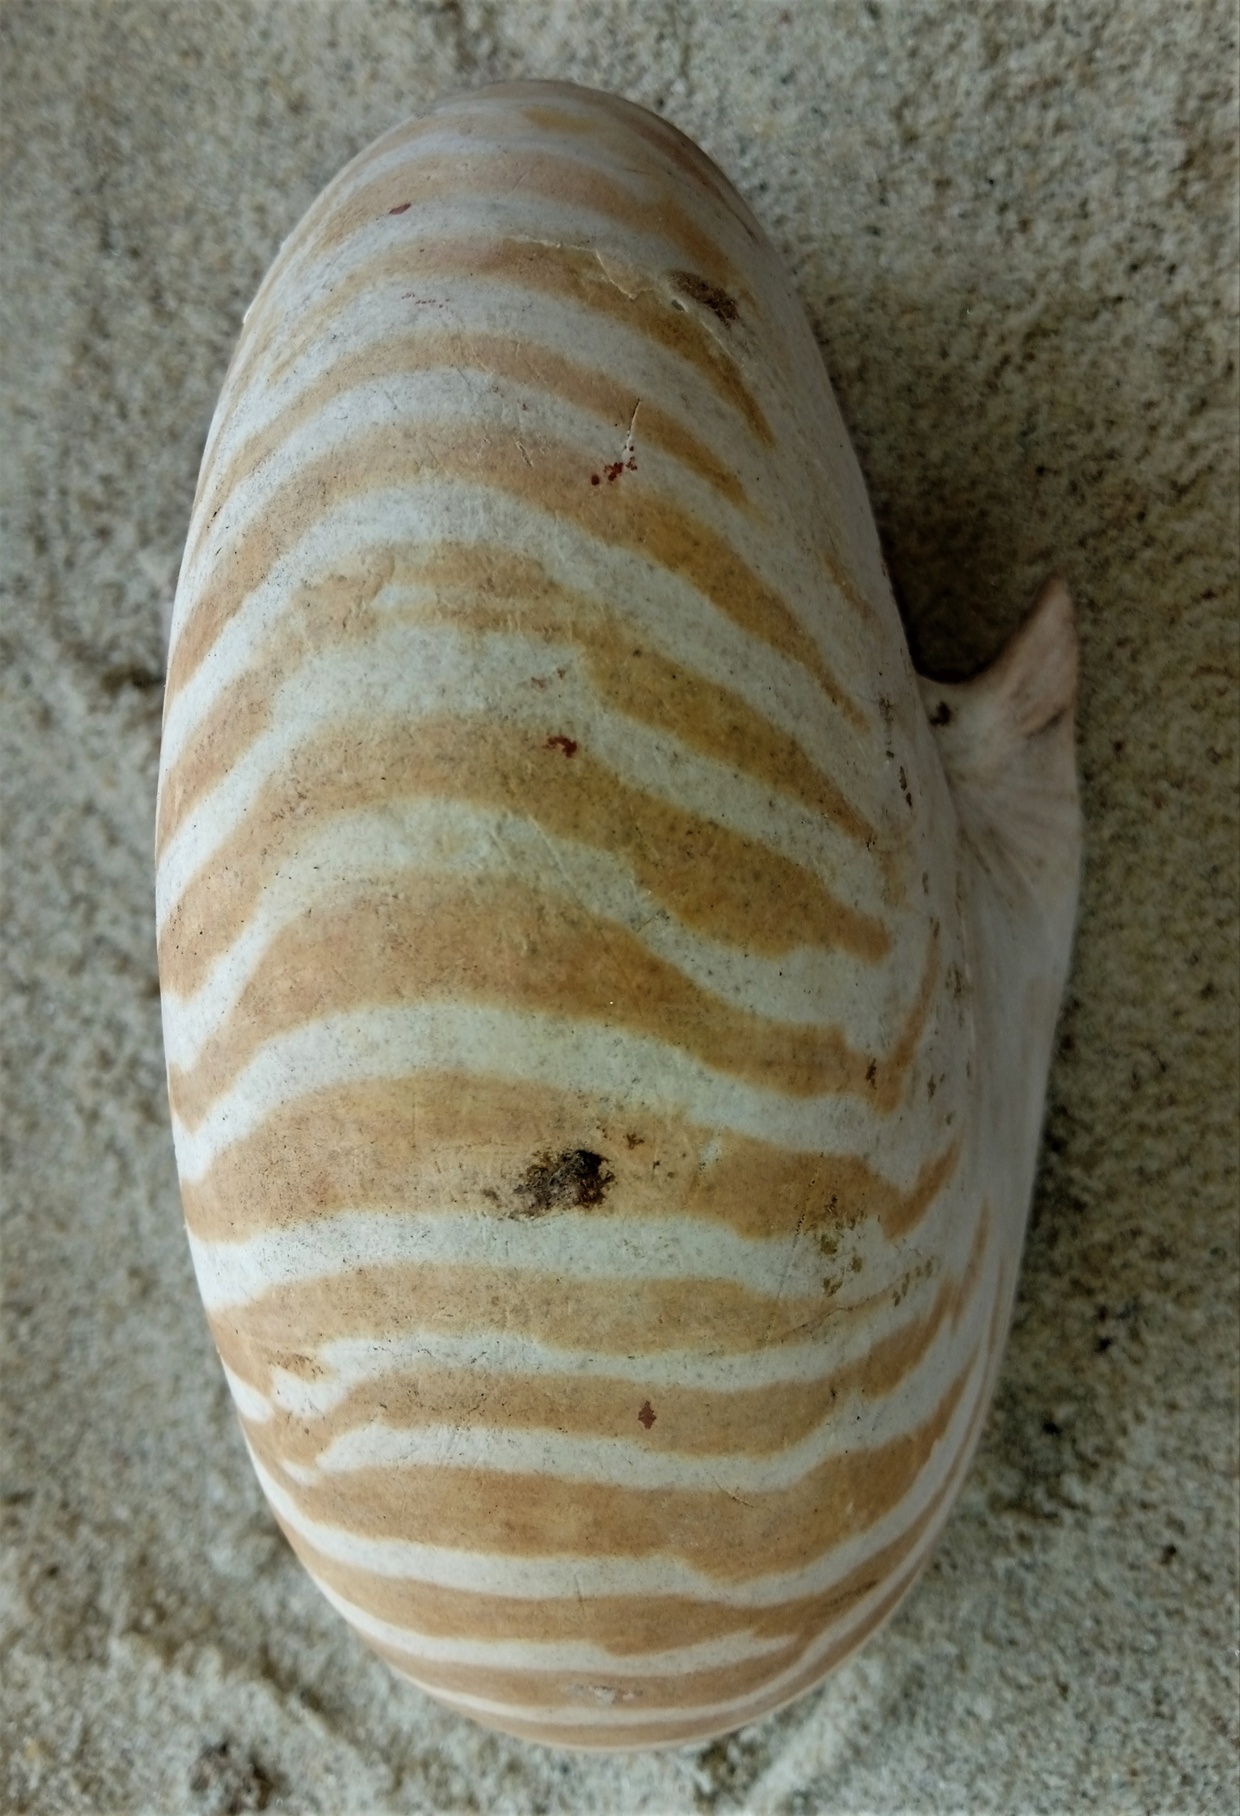 Nautilus shell found at Kijongo Bay Resort